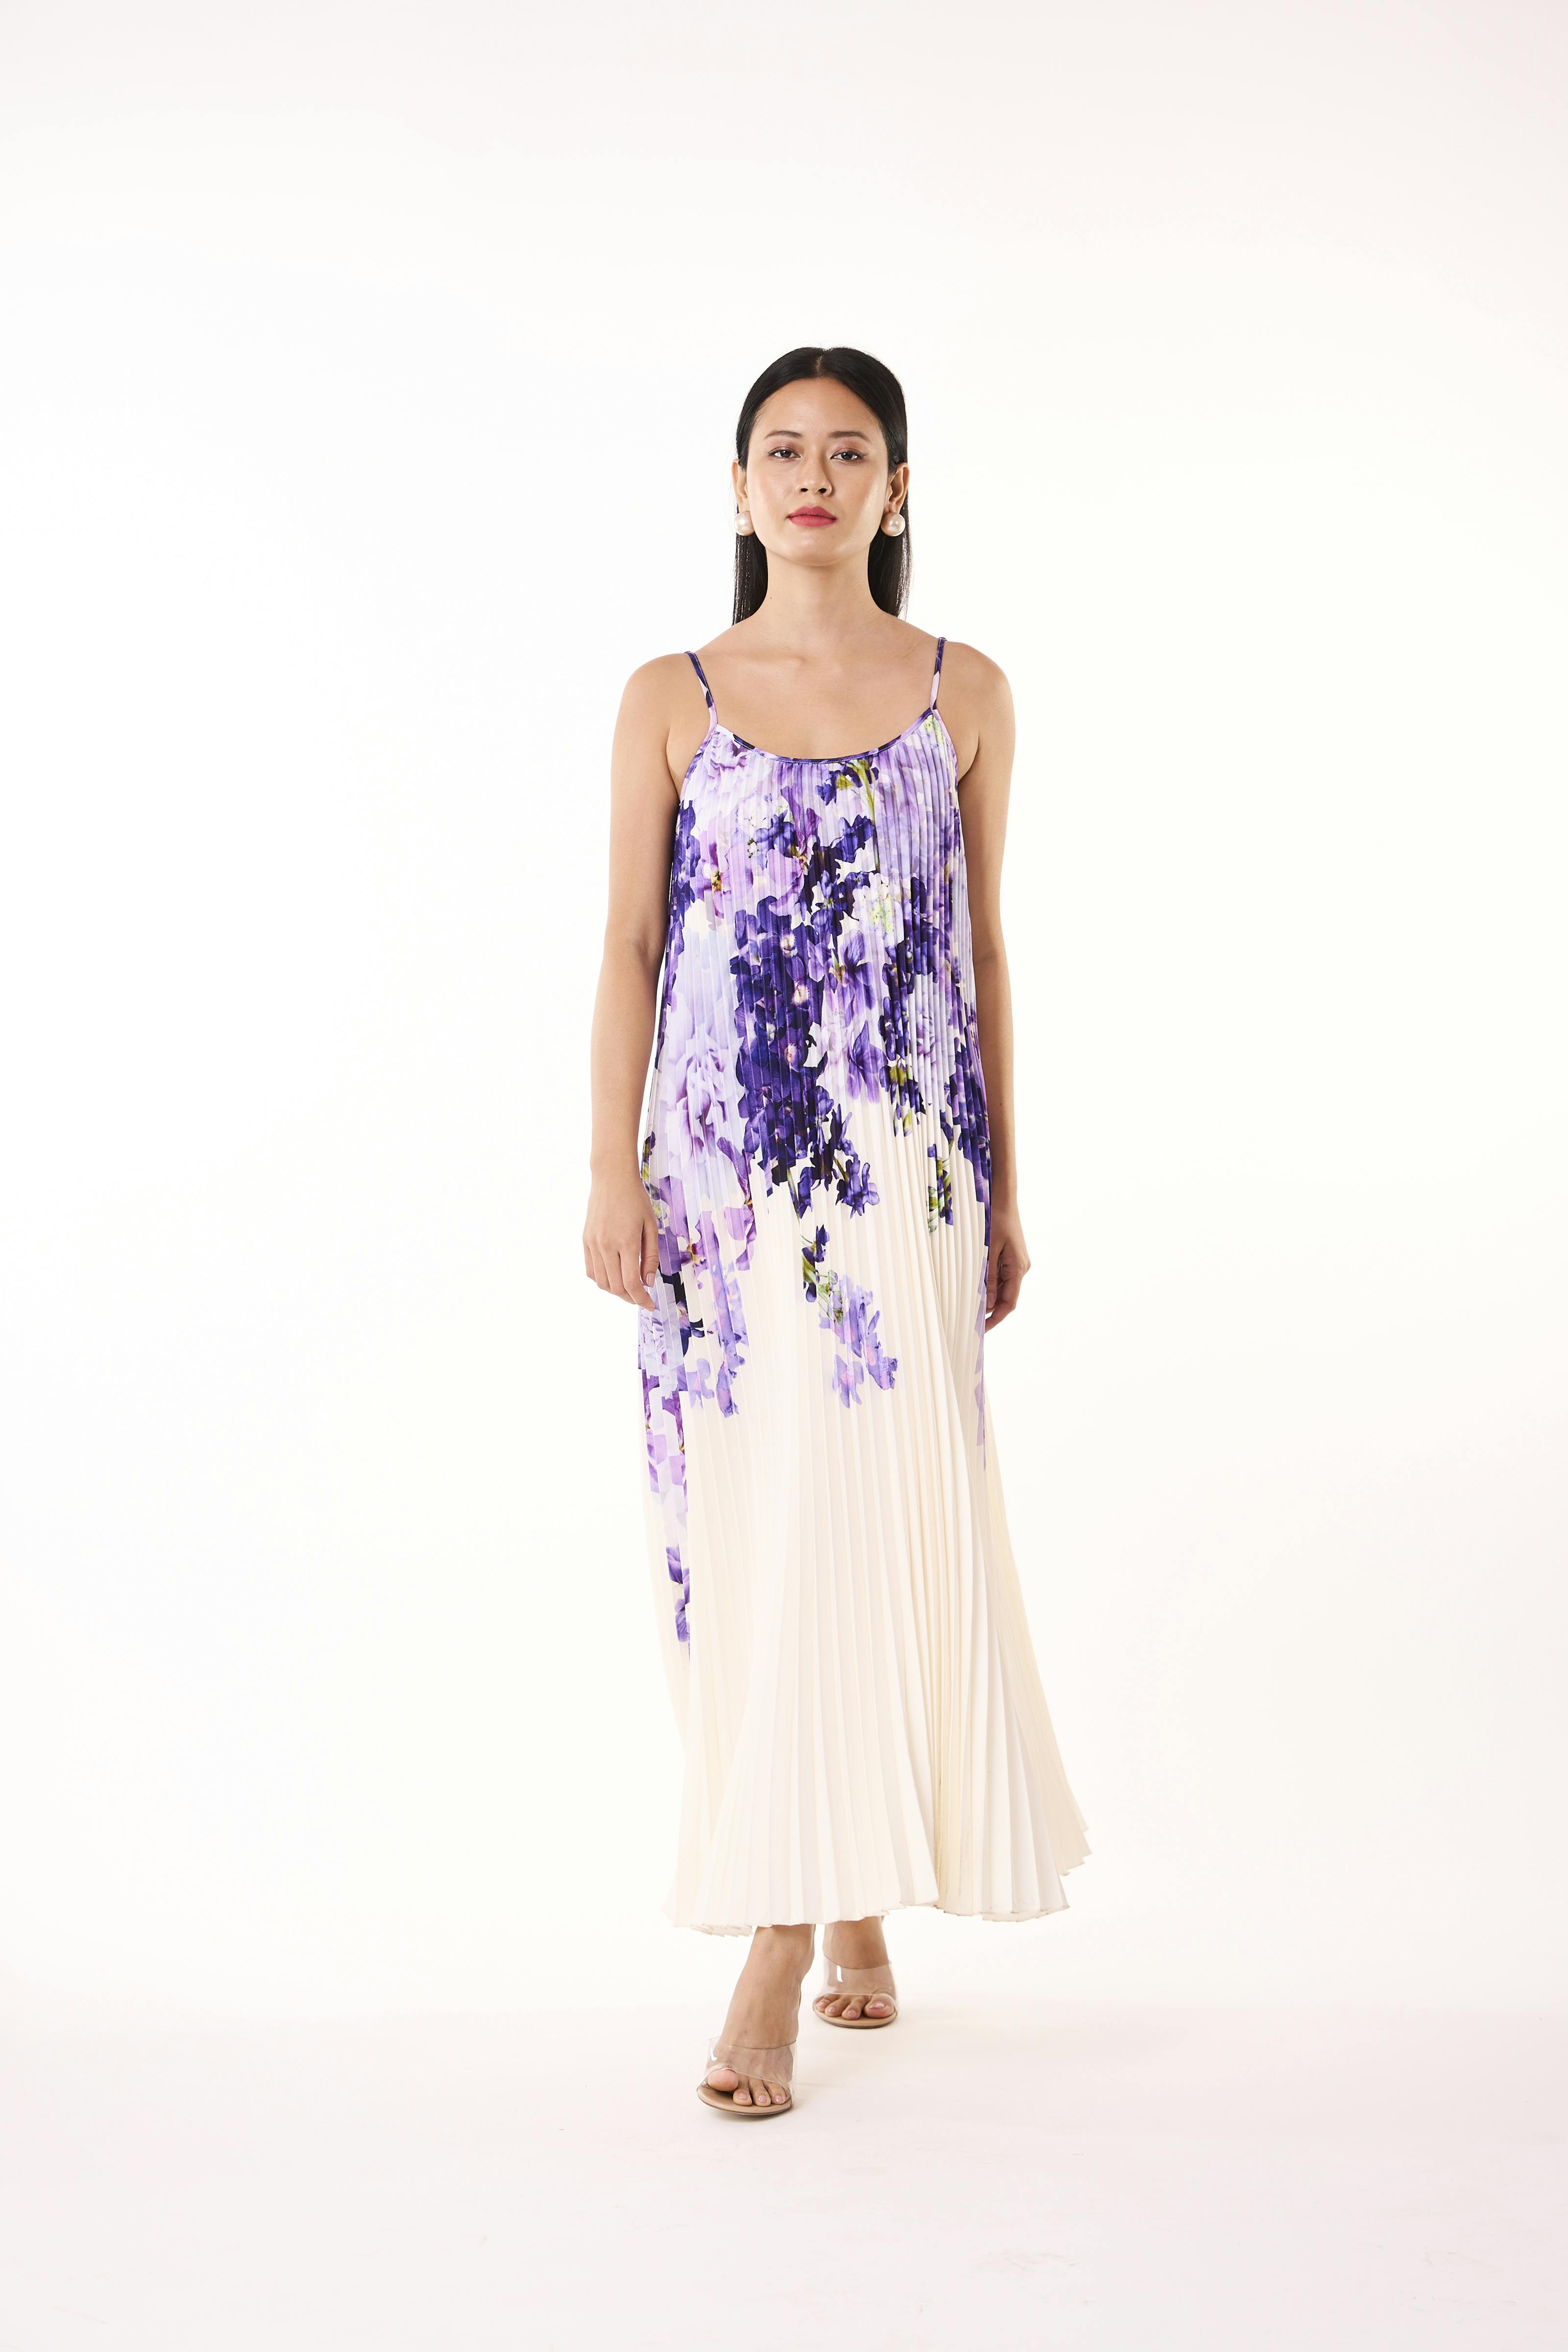 Olivia Floral Slip Dress - Cream, a product by Scarlet Sage